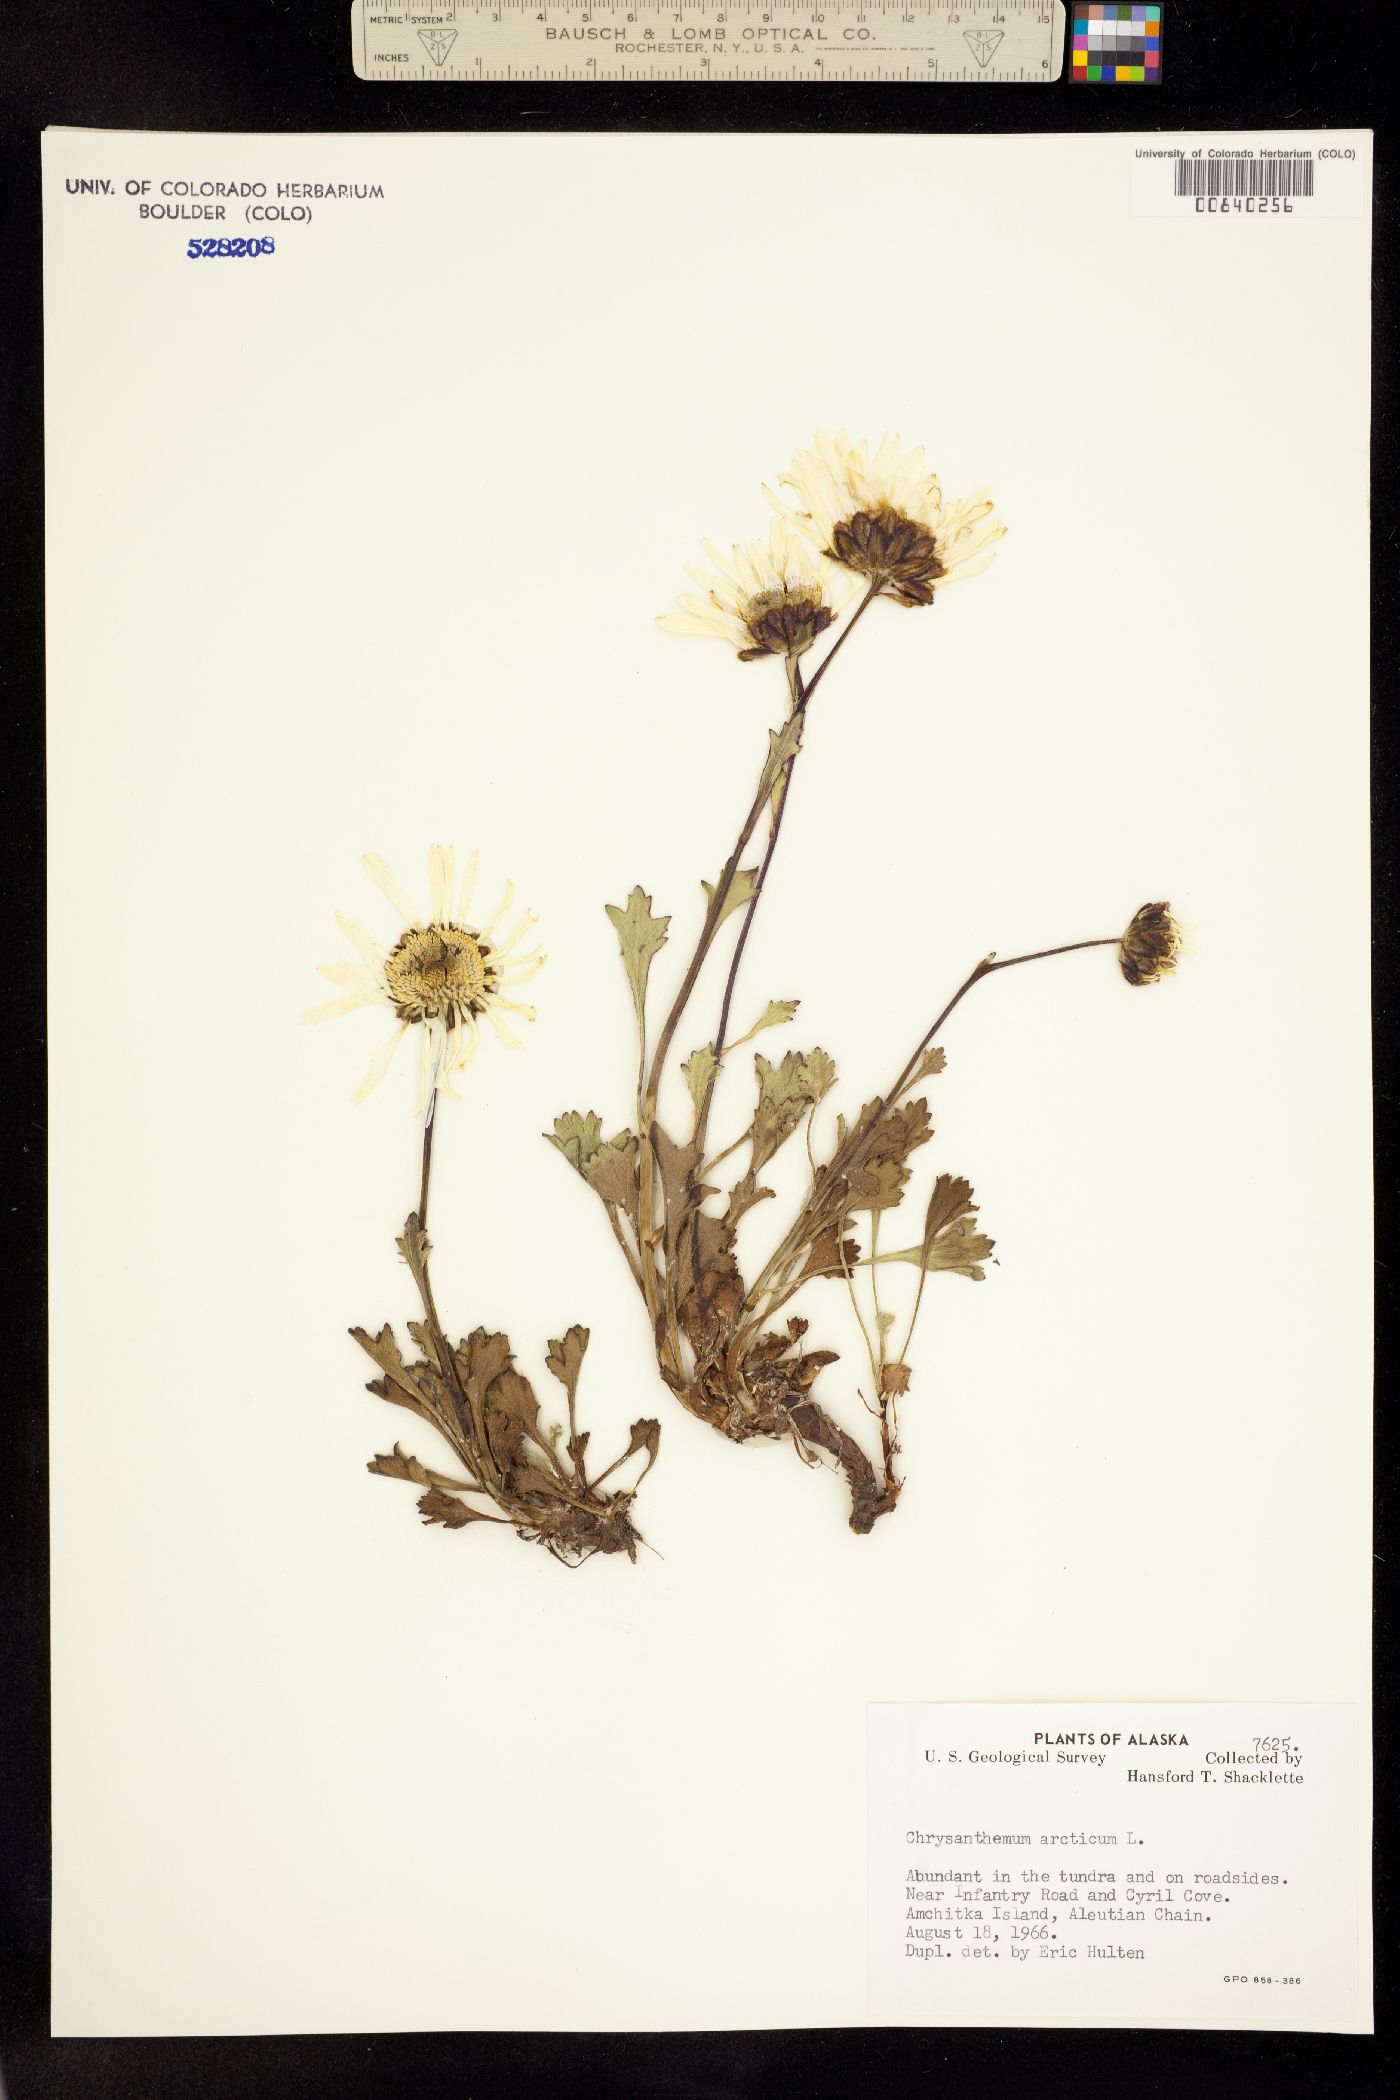 Chrysanthemum image